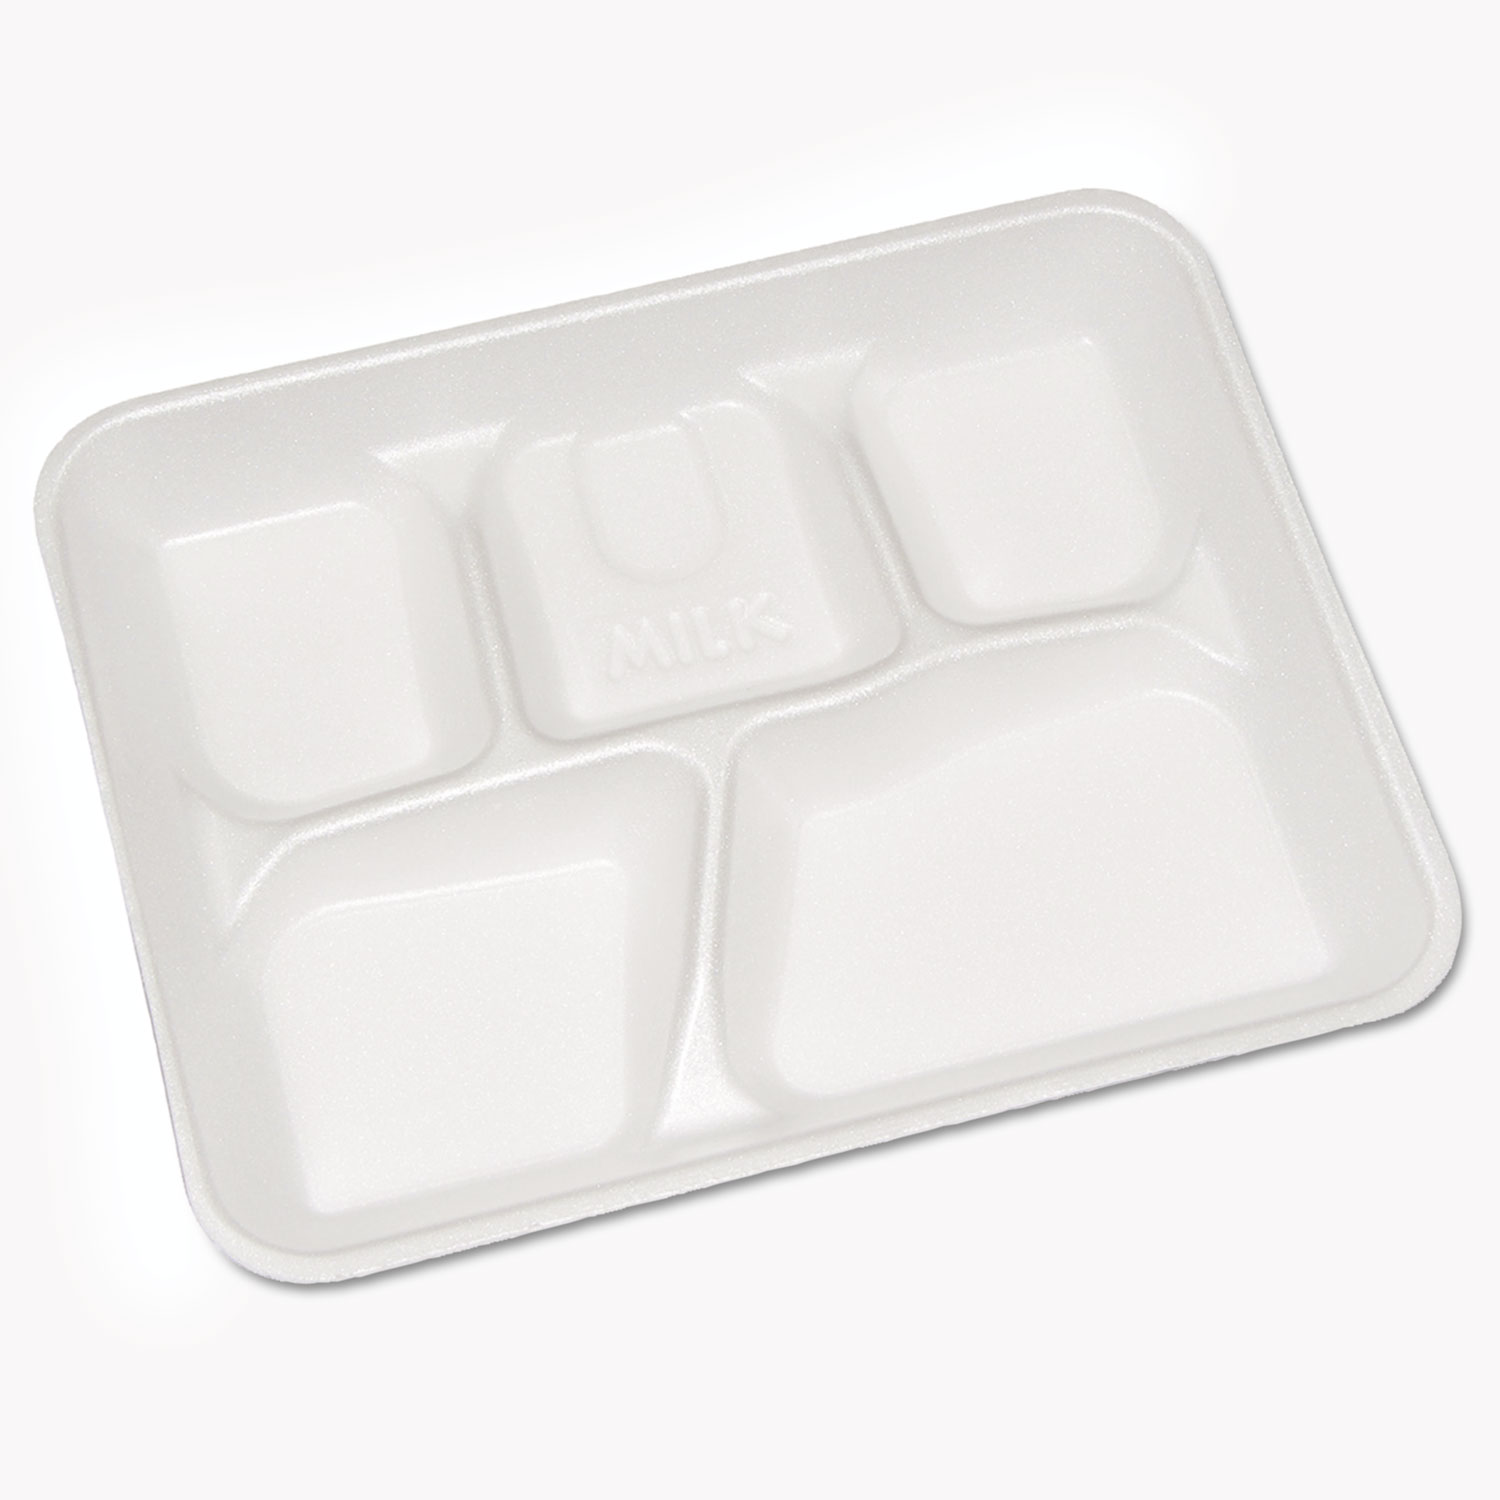  Pactiv YTH10500SGBX Lightweight Foam School Trays, 5-Compartment, 8.25 x 10.5 x 1,  White, 500/Carton (PCTYTH10500SGBX) 